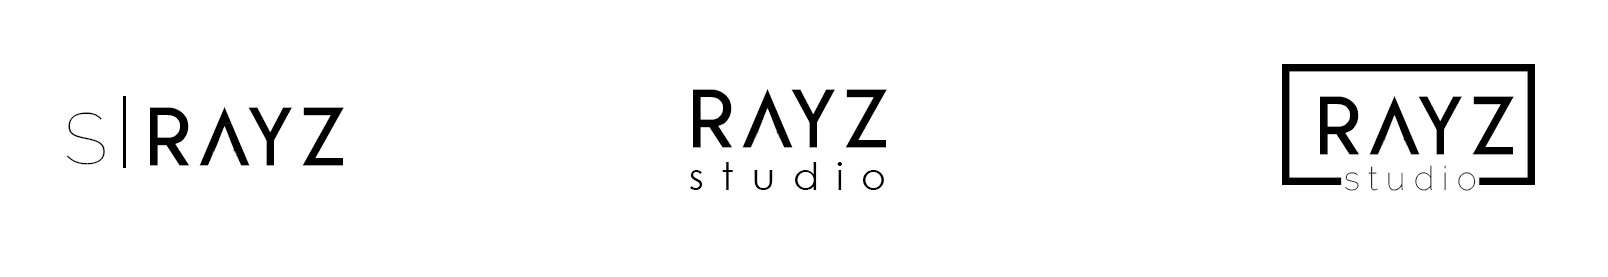 logo Rayz-test.jpg